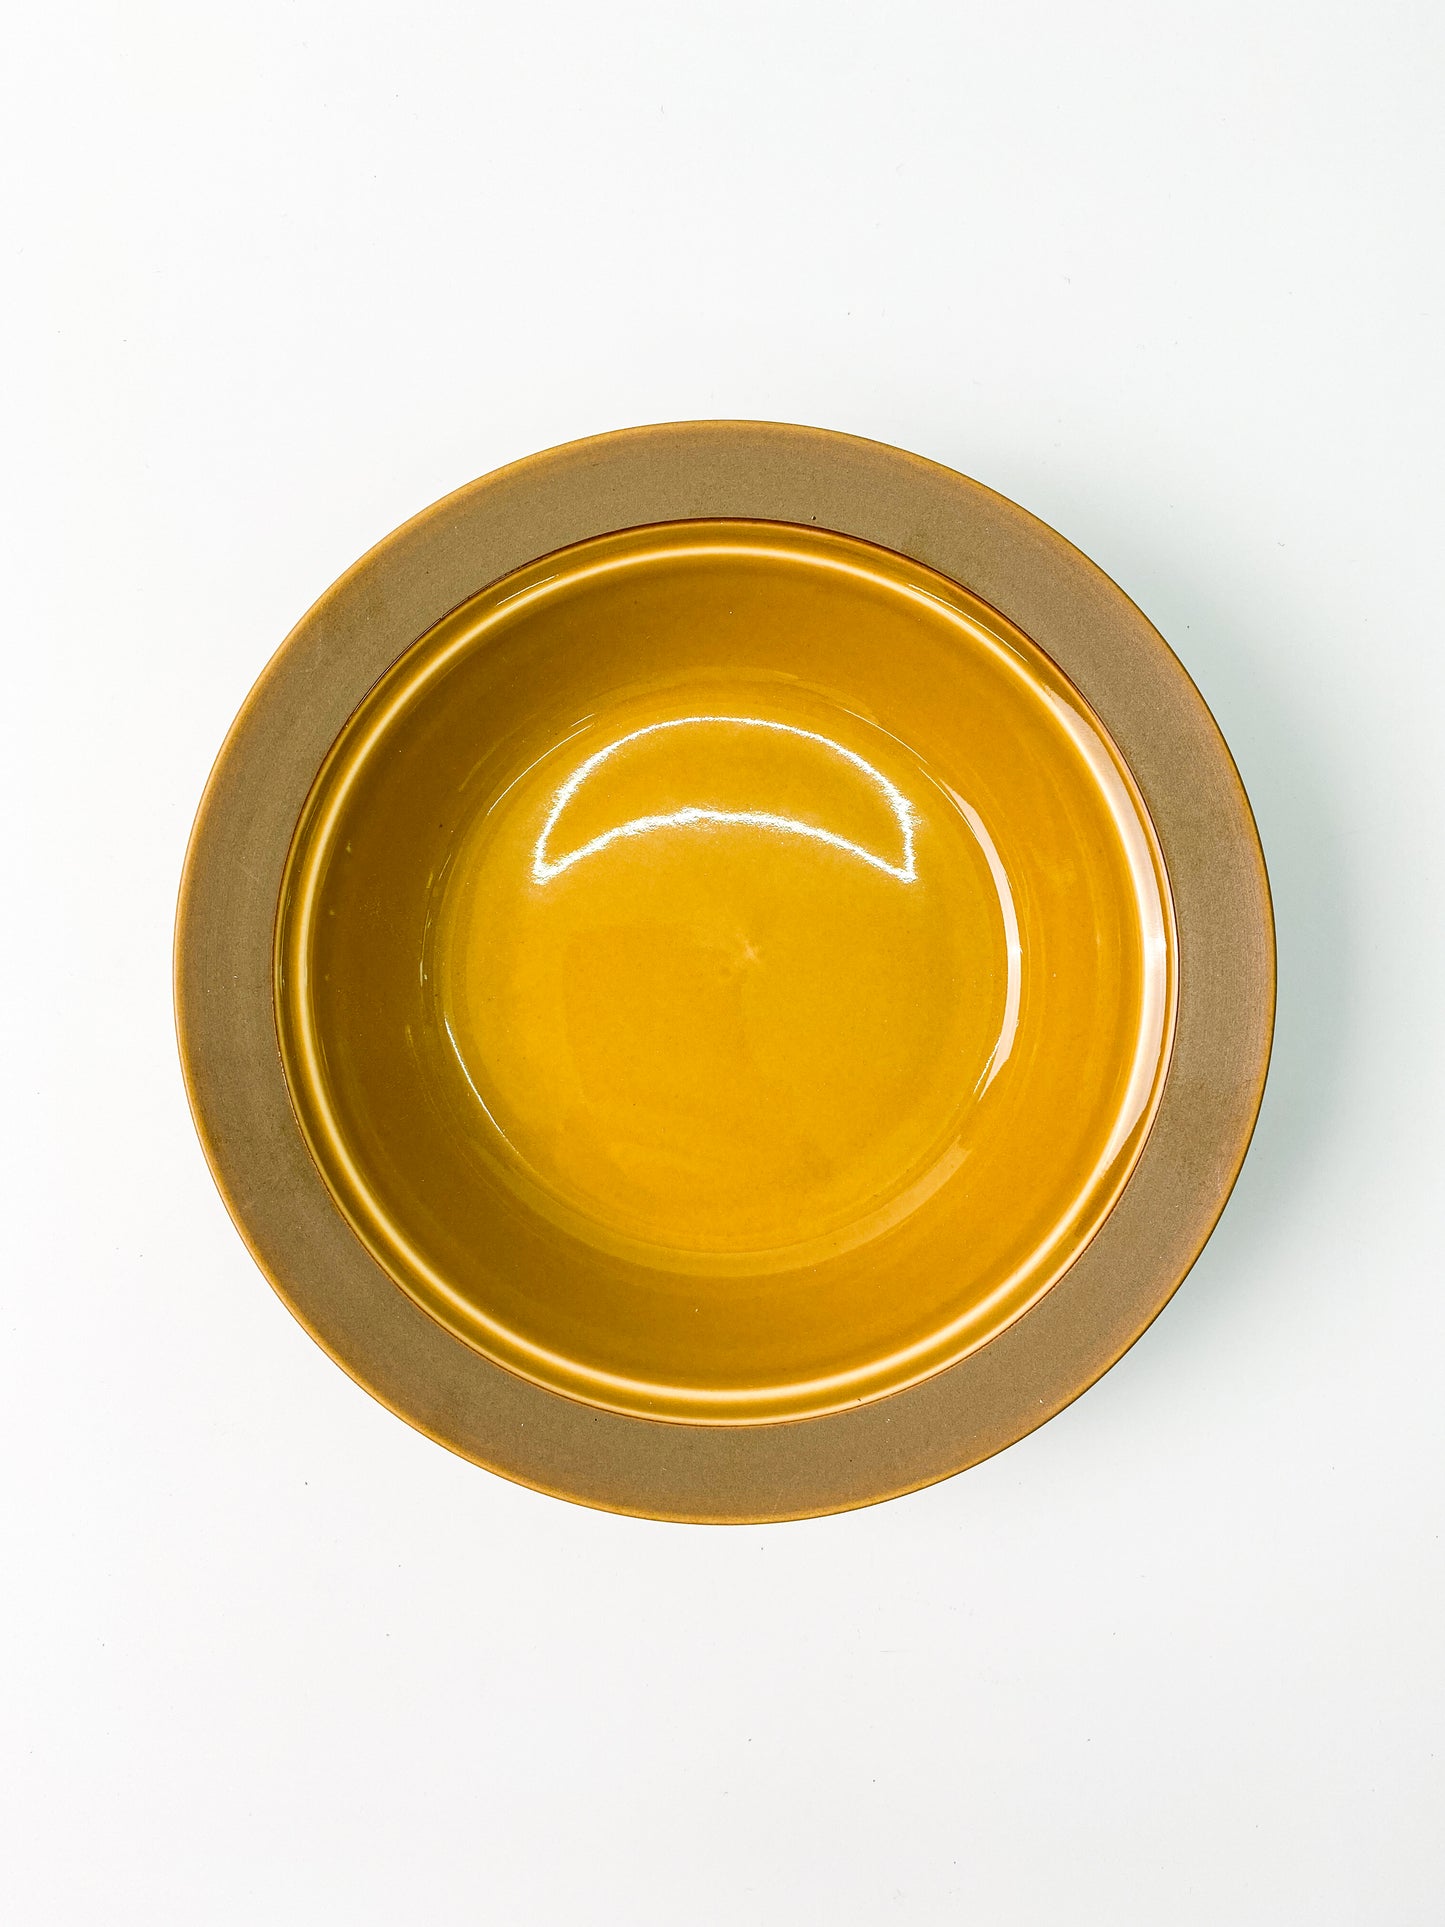 日本製美濃燒 陶瓷圓盤 (蜂蜜琥珀色) | Japanese Mino Ware Ceramic Plate (Honey Amber) (9cm)